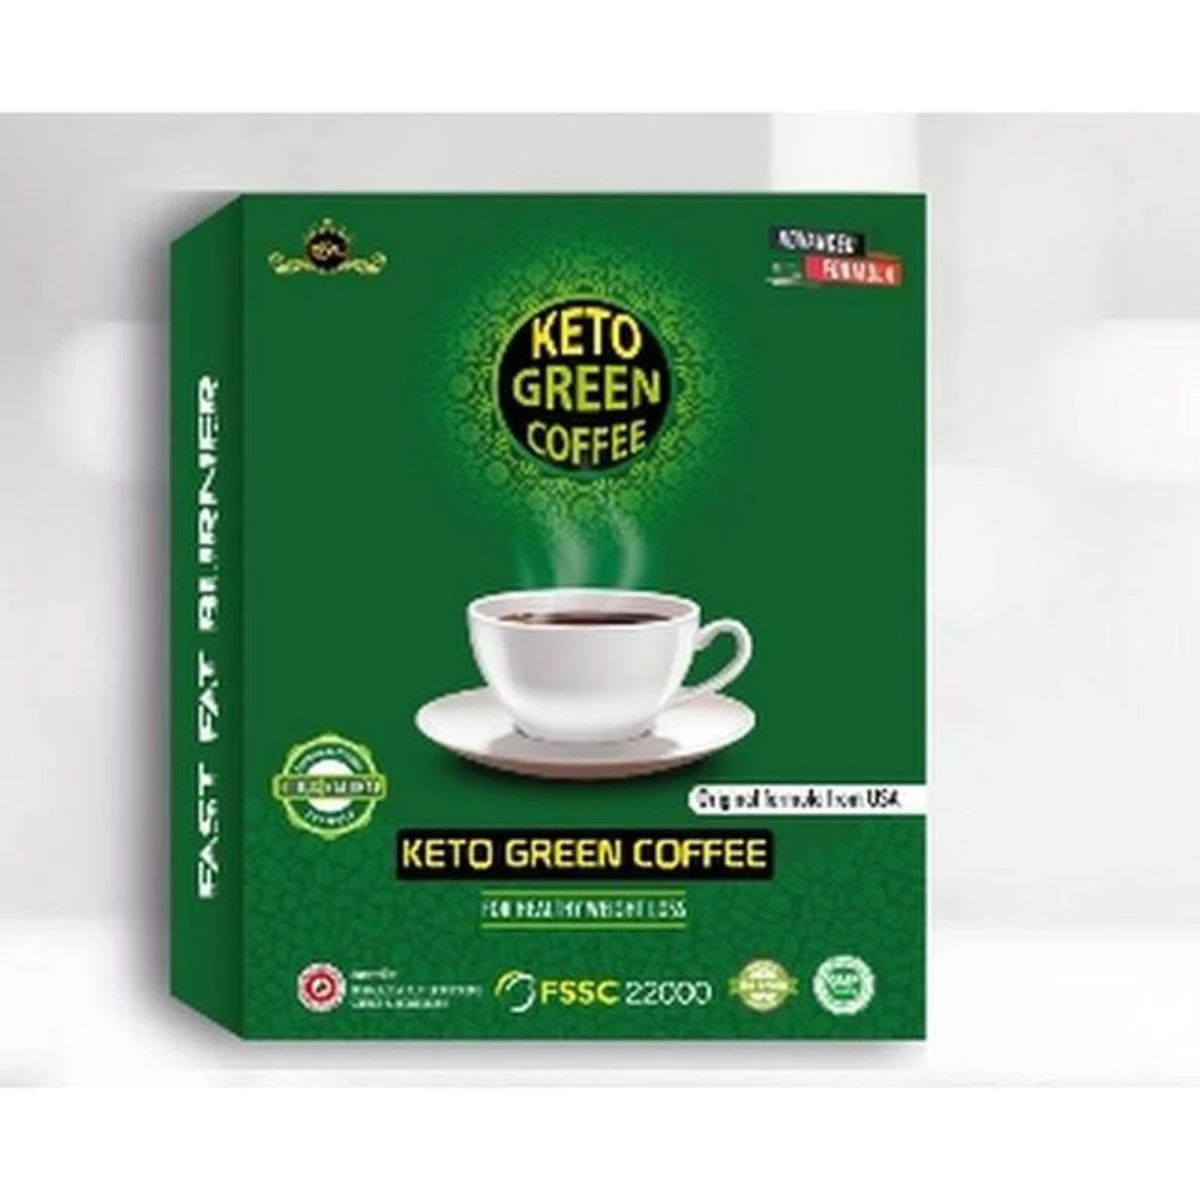 Keto Green Coffee Natural Weight Loss Green Coffee